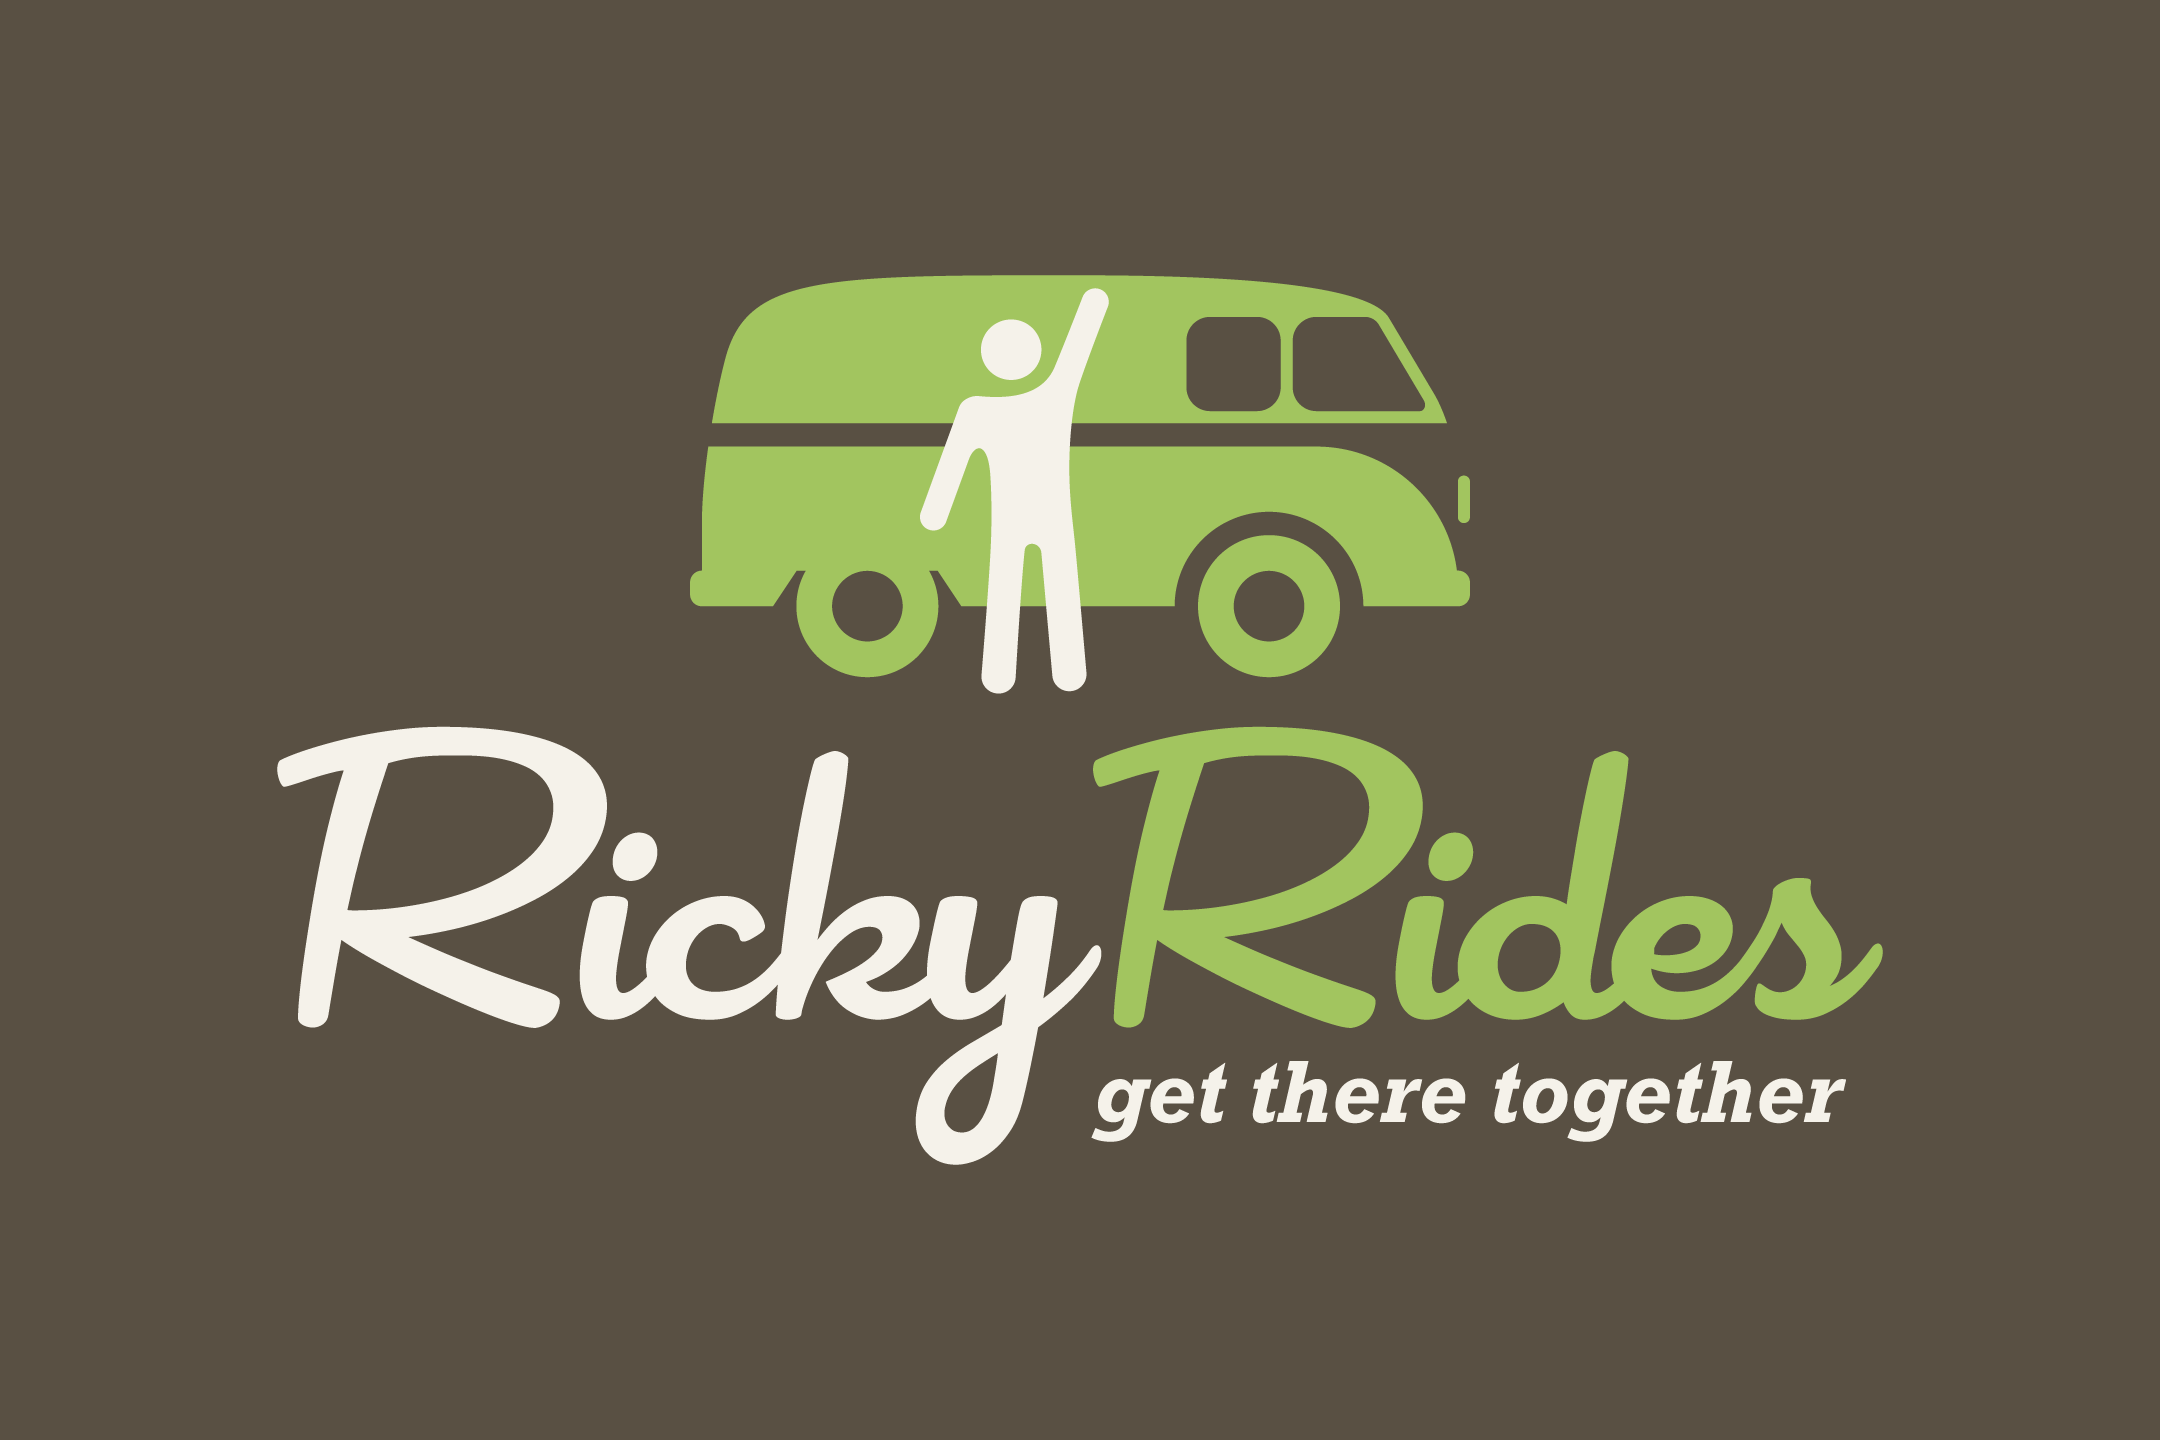 Green Brown Logo - RickyRides | About